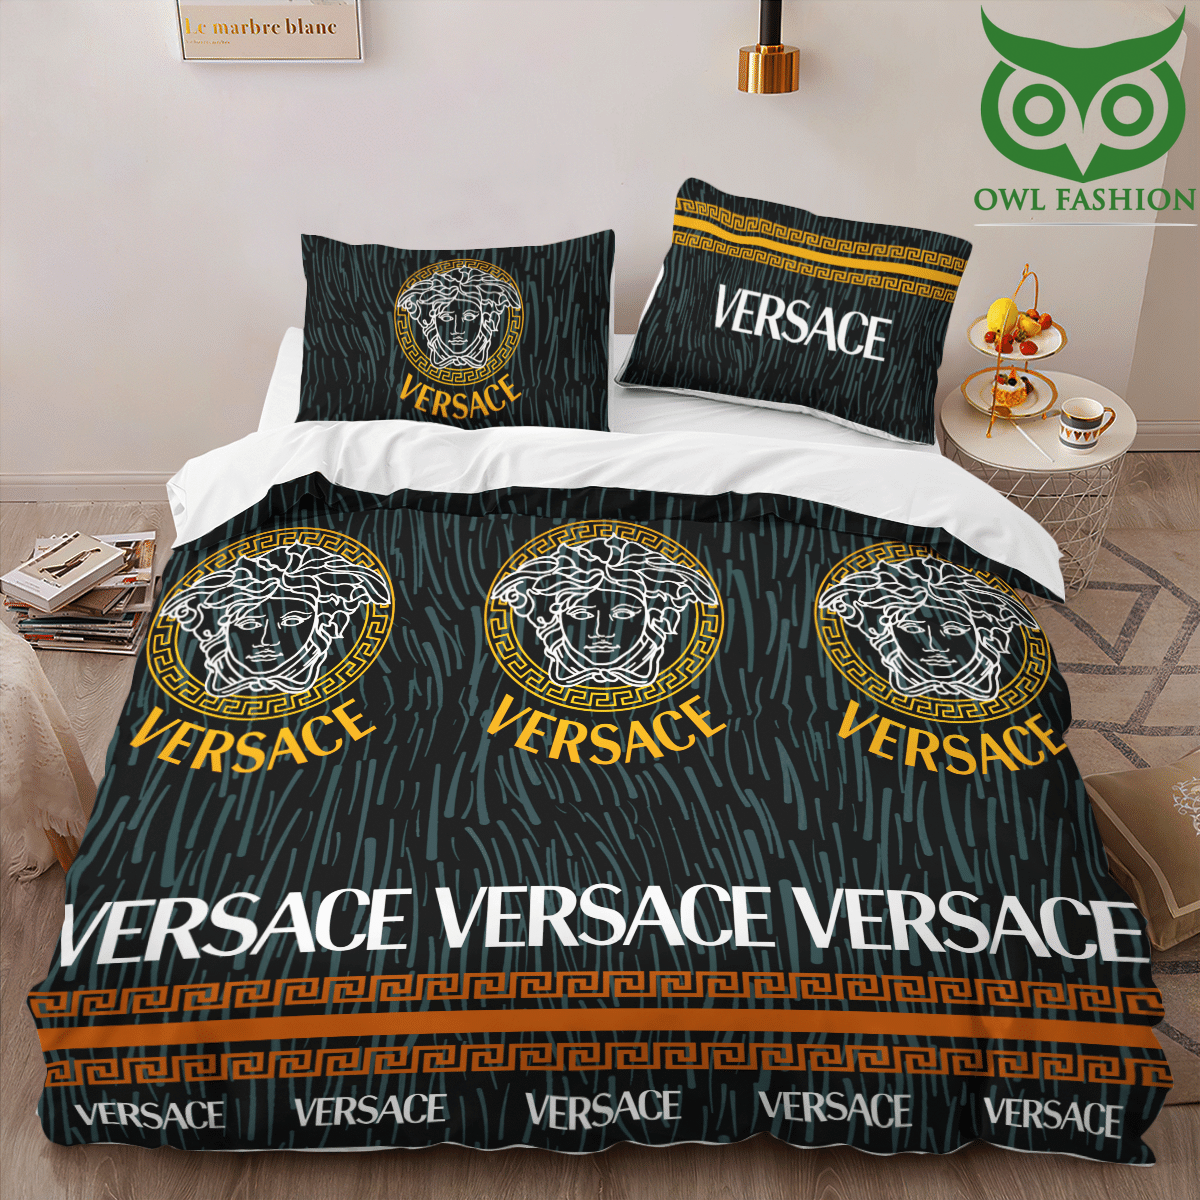 69 LUXURY Versace Royal golden logo bedding set